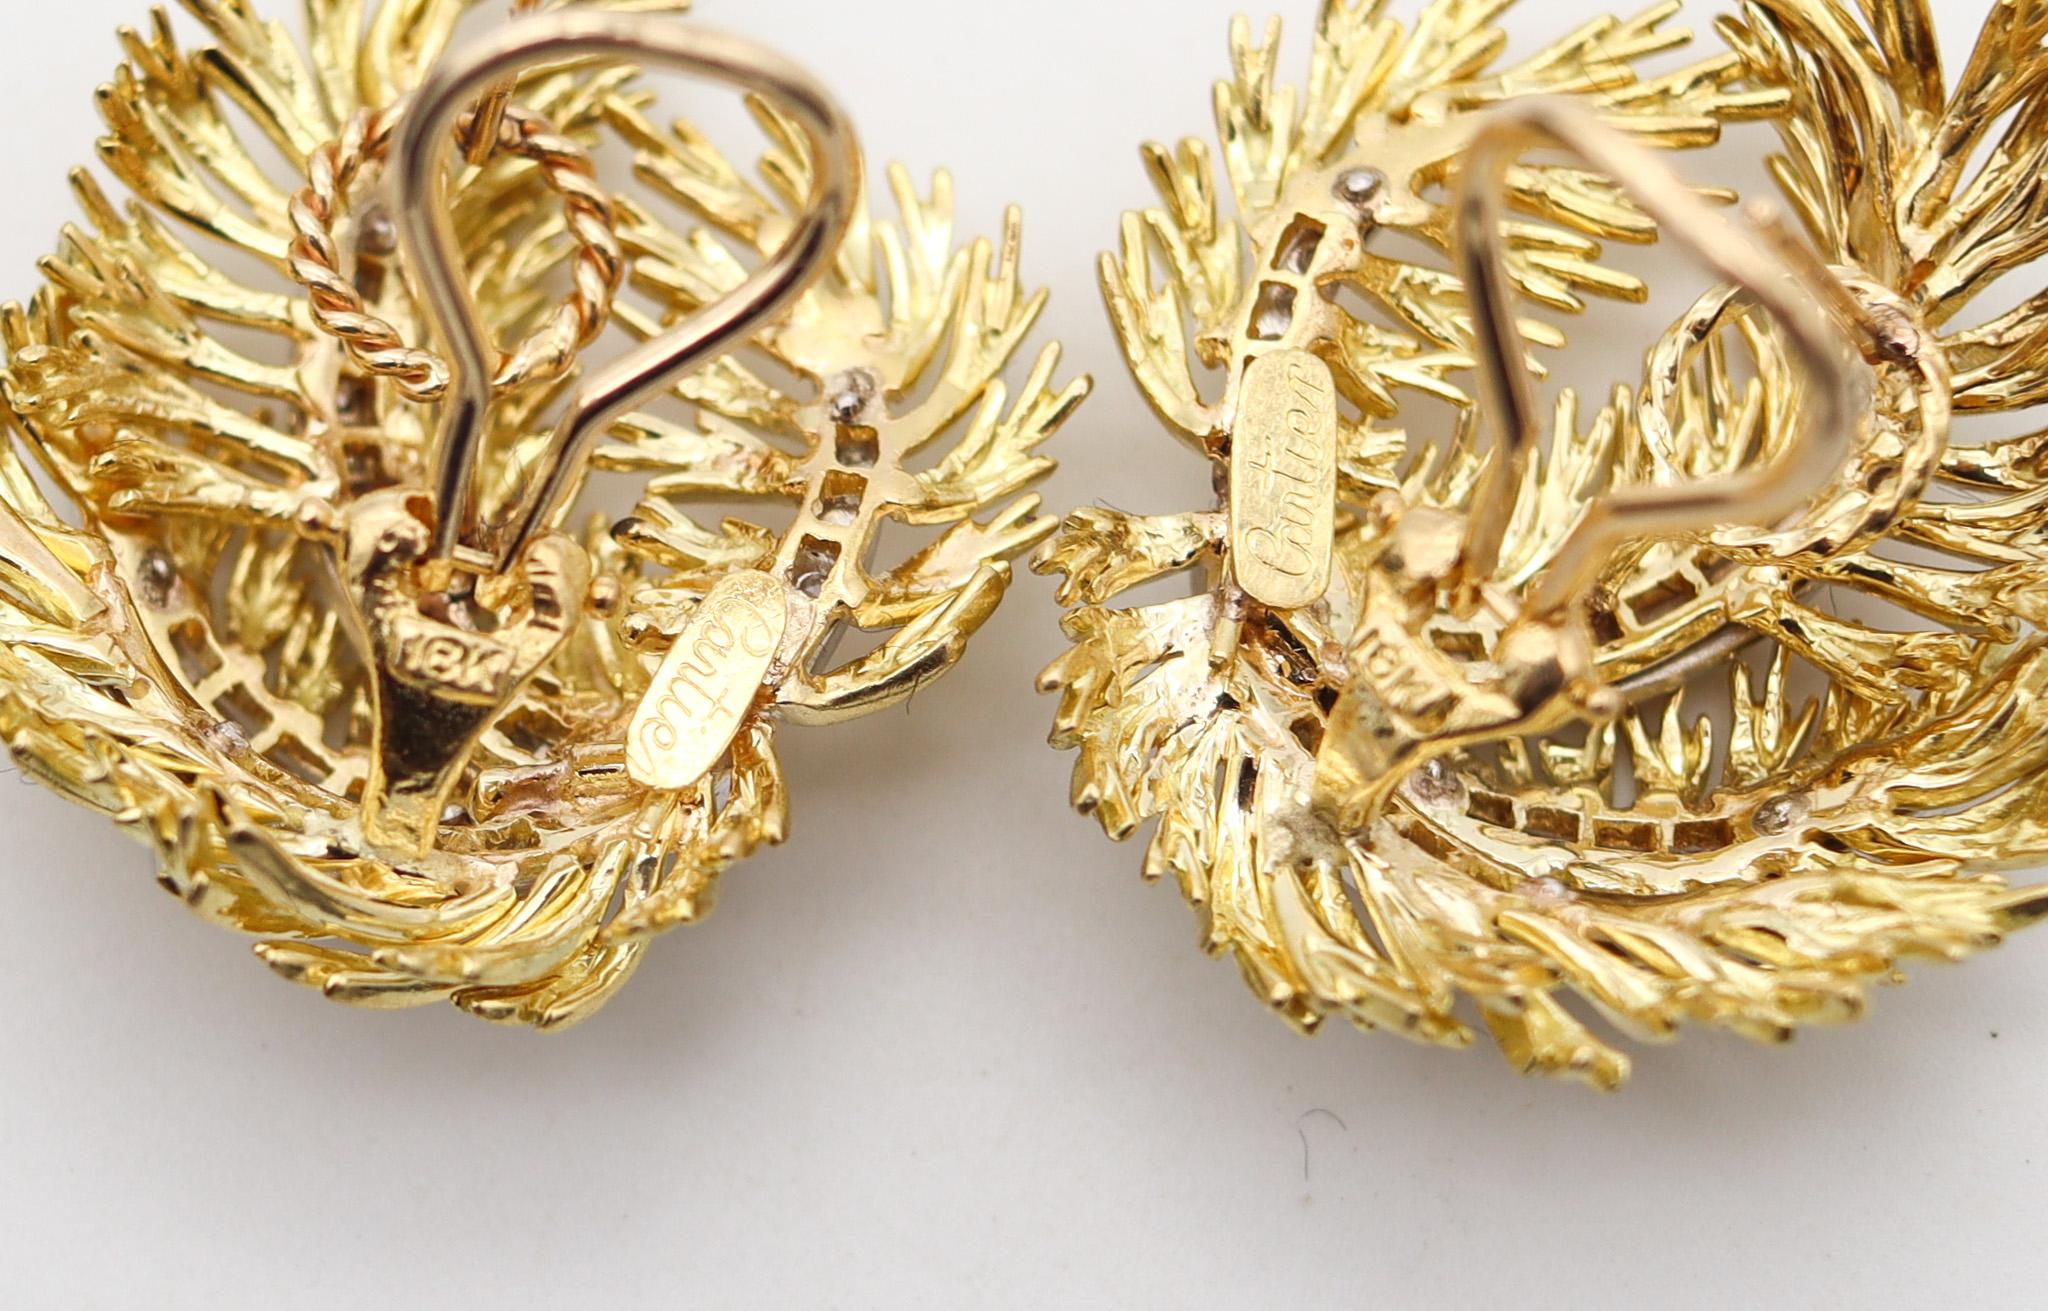 Women's Cartier 1960 Clips Earrings In 18Kt Yellow Gold With 1.76 Ctw In VS Diamonds